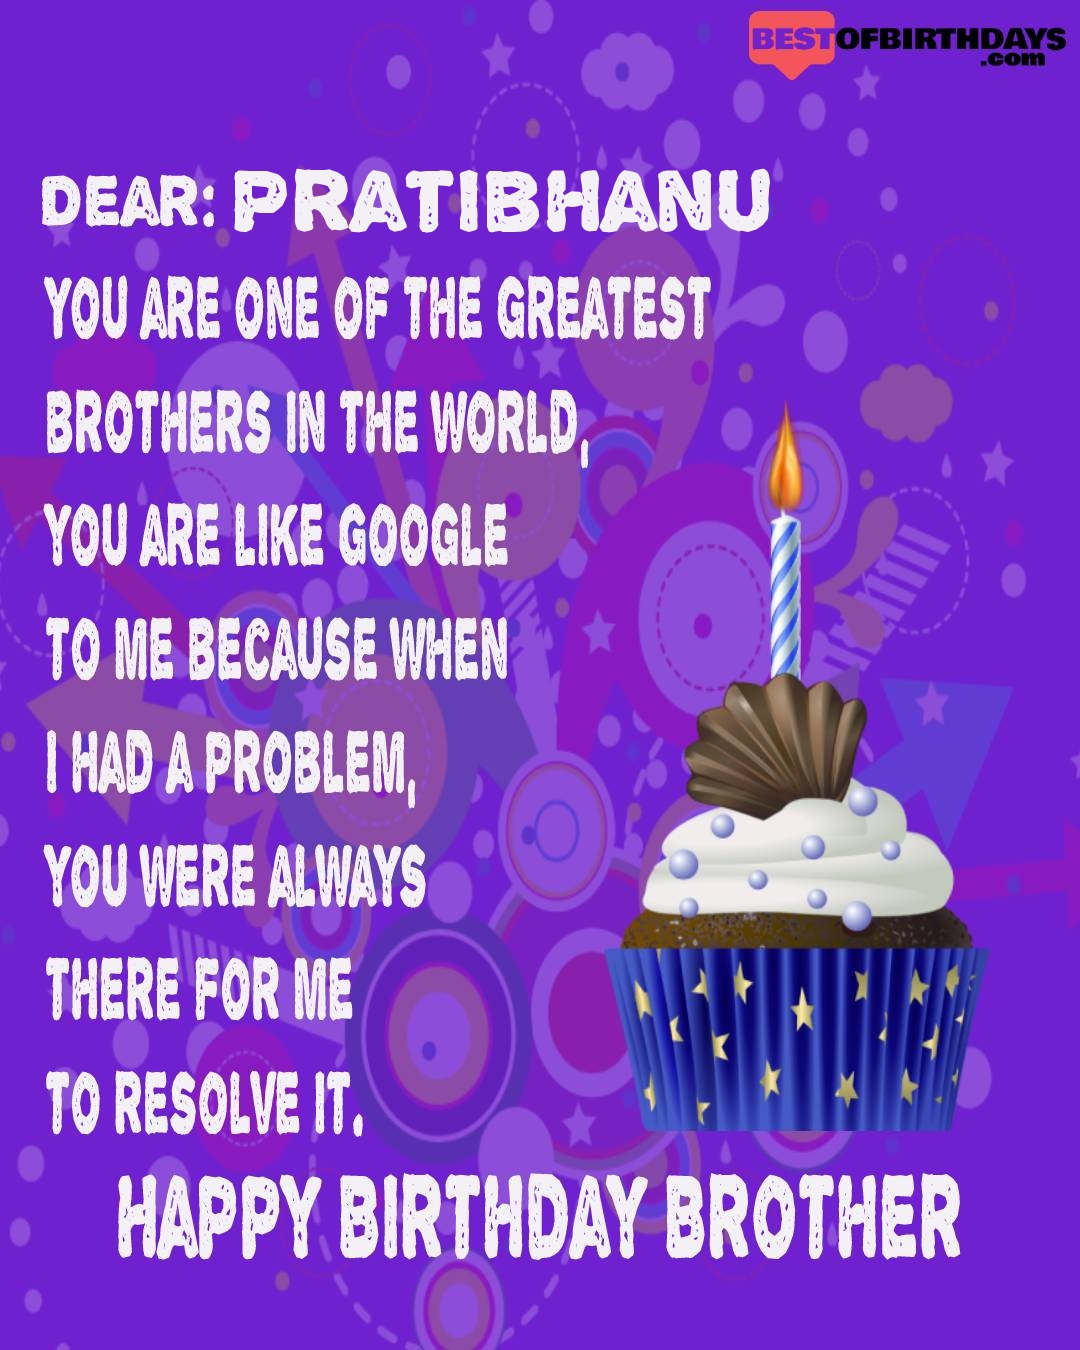 Happy birthday pratibhanu bhai brother bro